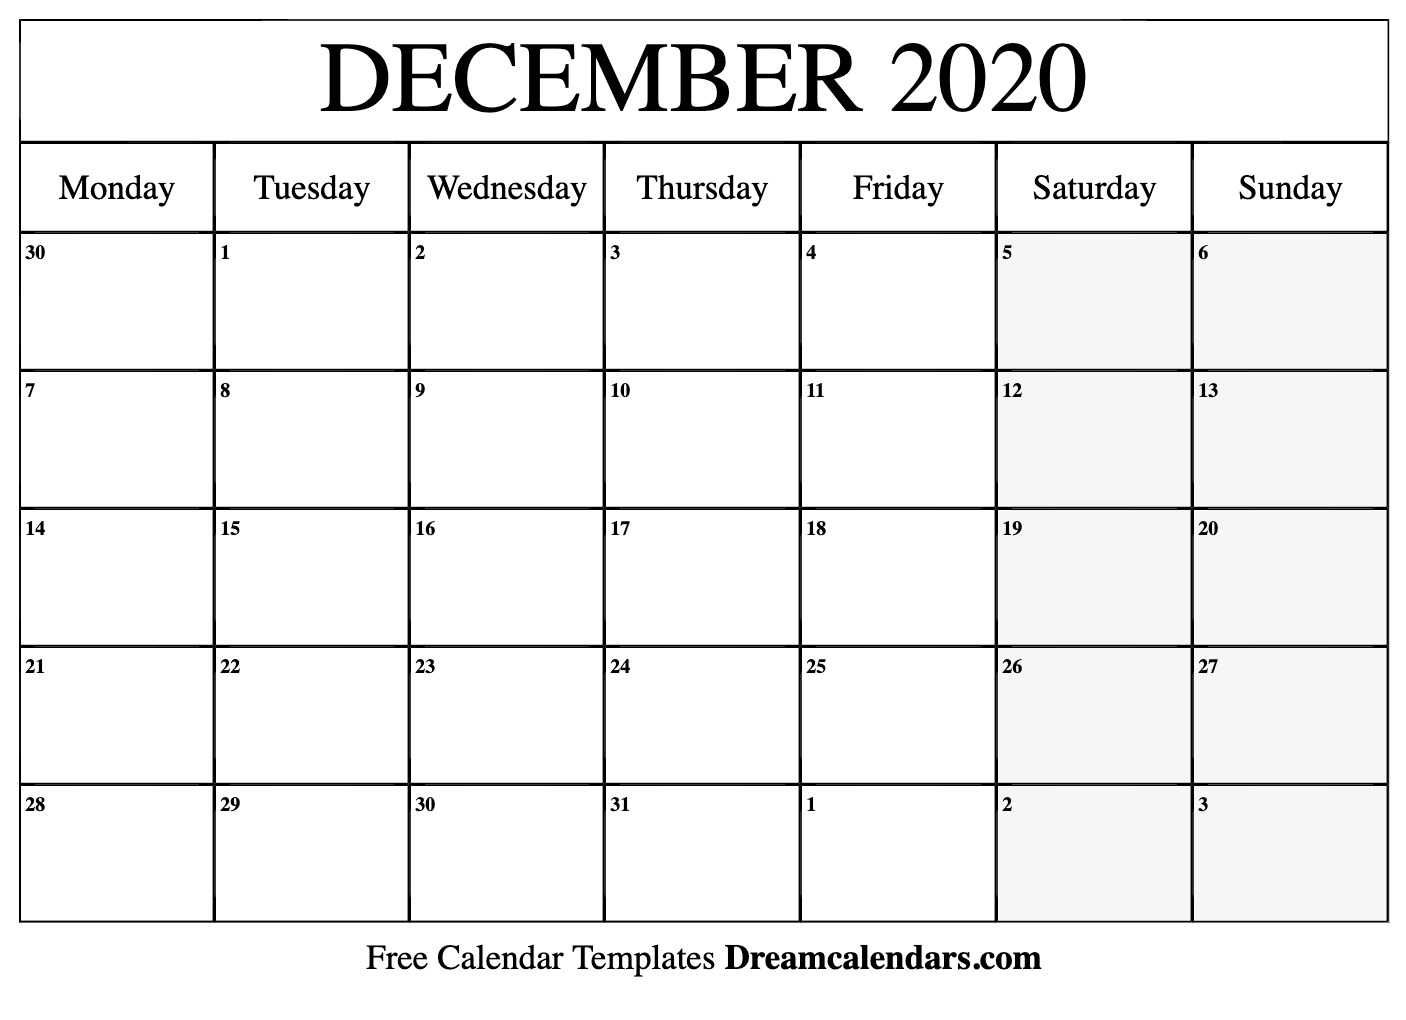 December 2020 Calendar | Free Blank Printable Templates within December Win Calendar